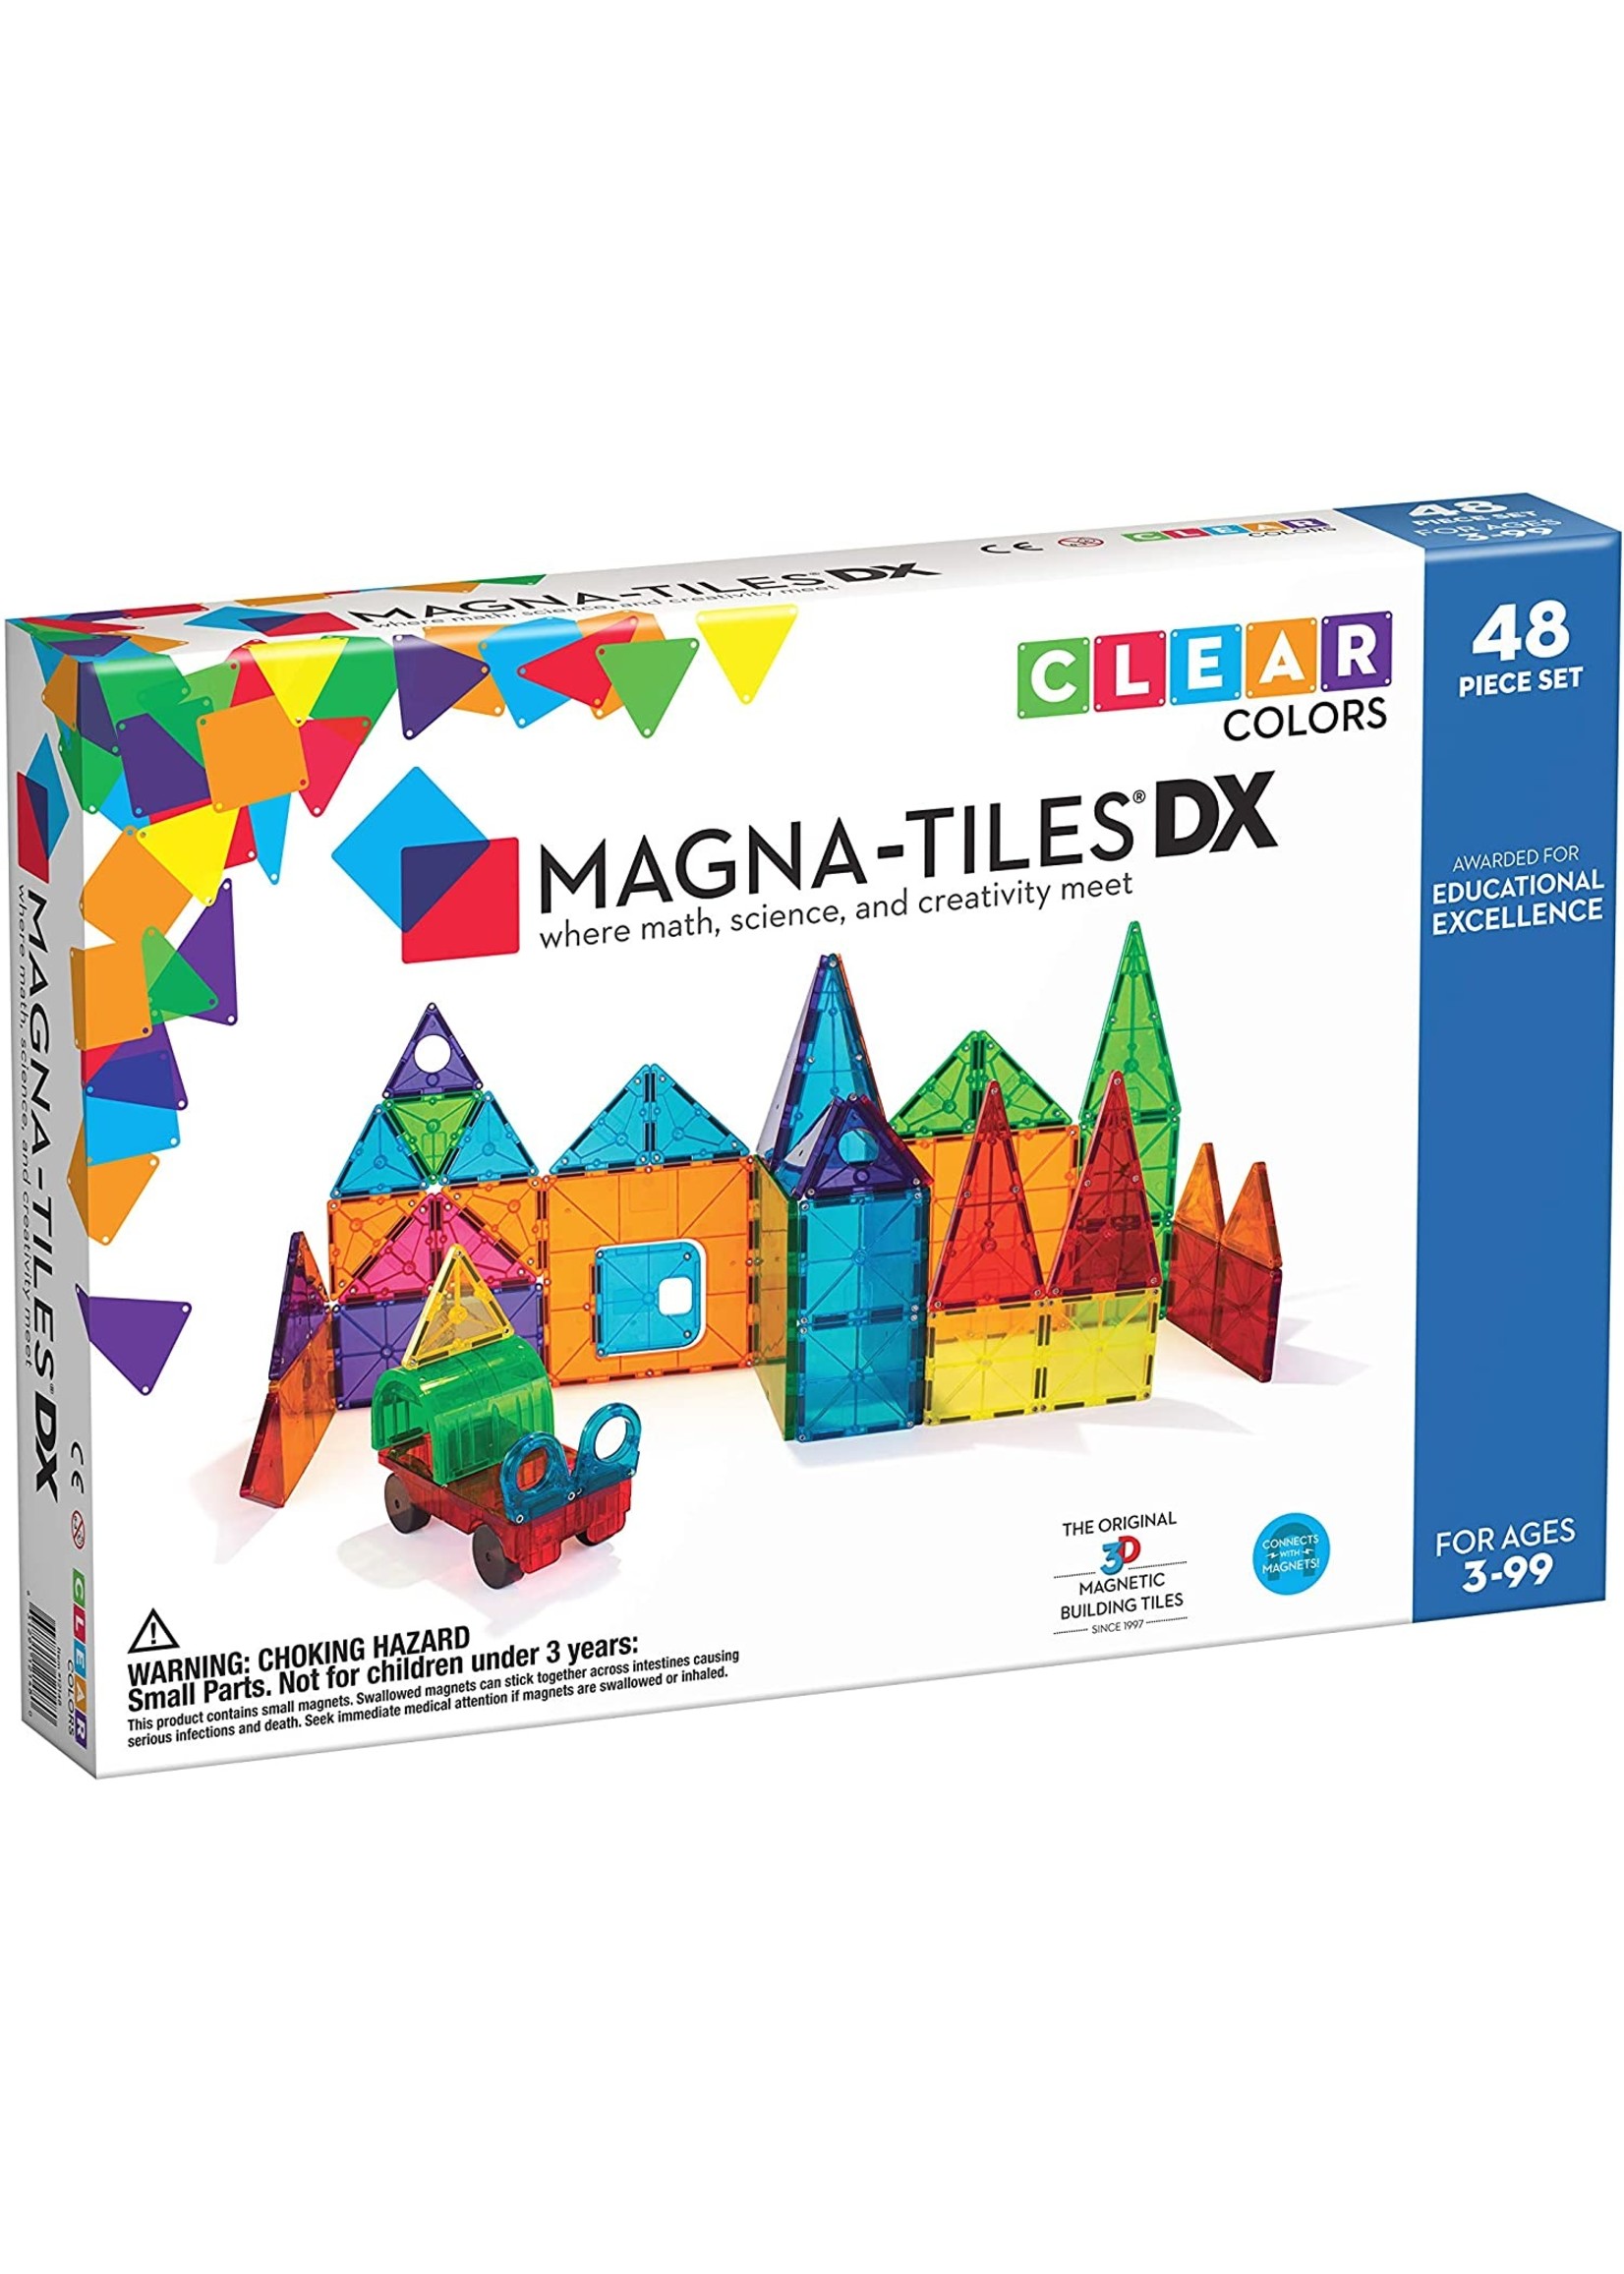 Valtech Magna-Tiles® Clear Colors 48-Piece Deluxe Set